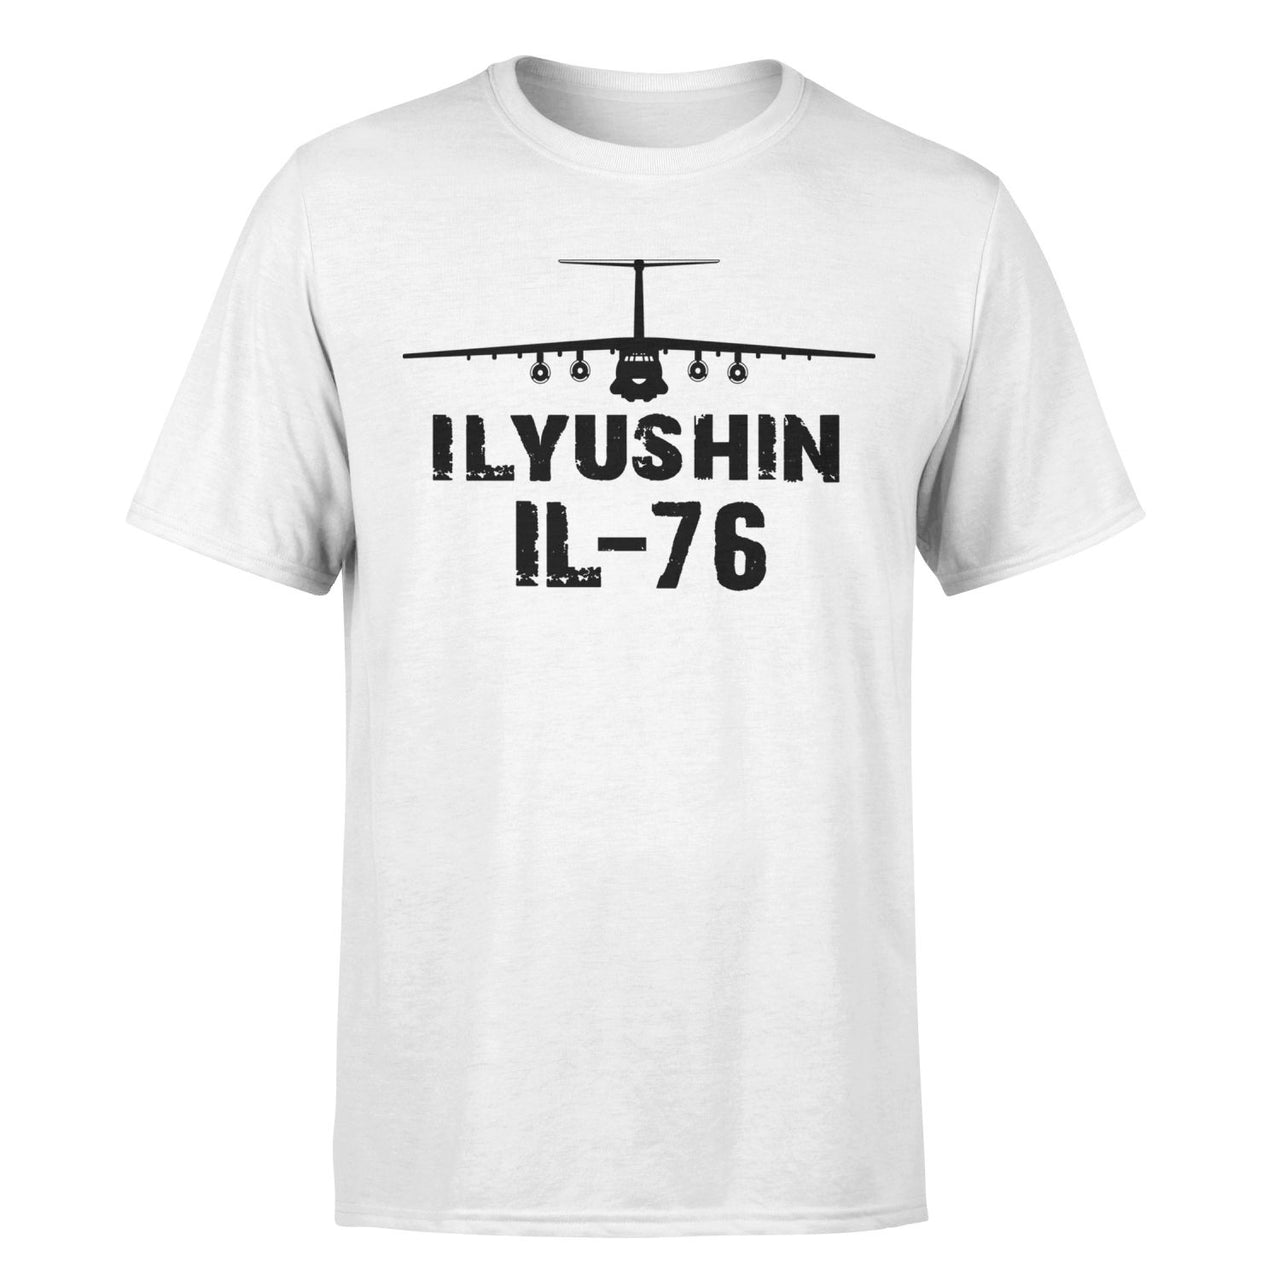 ILyushin IL-76 & Plane Designed T-Shirts